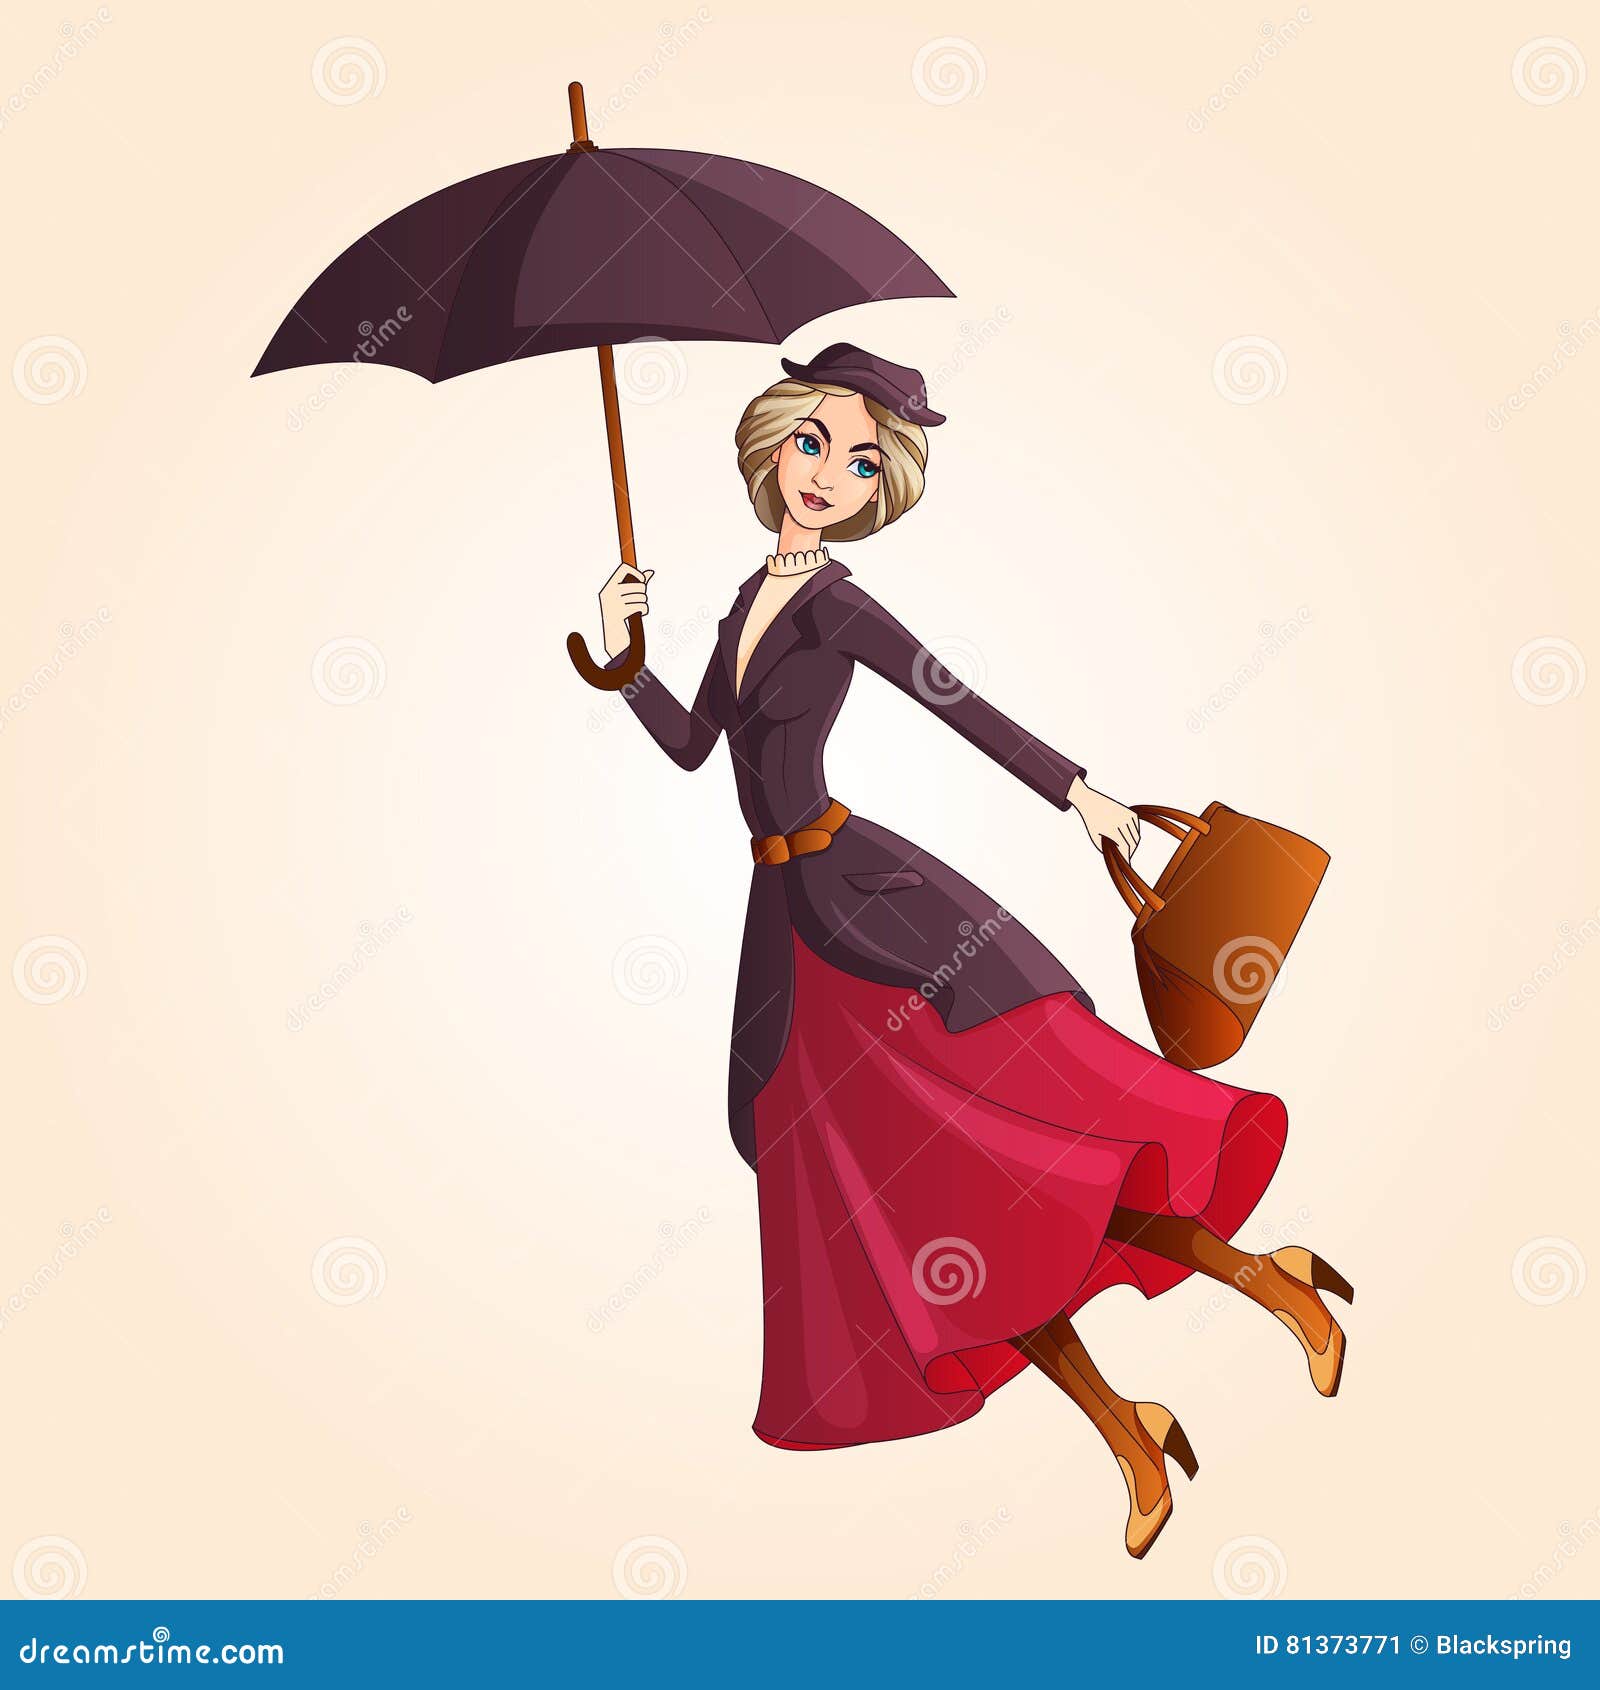 marry poppins flying on umbrella